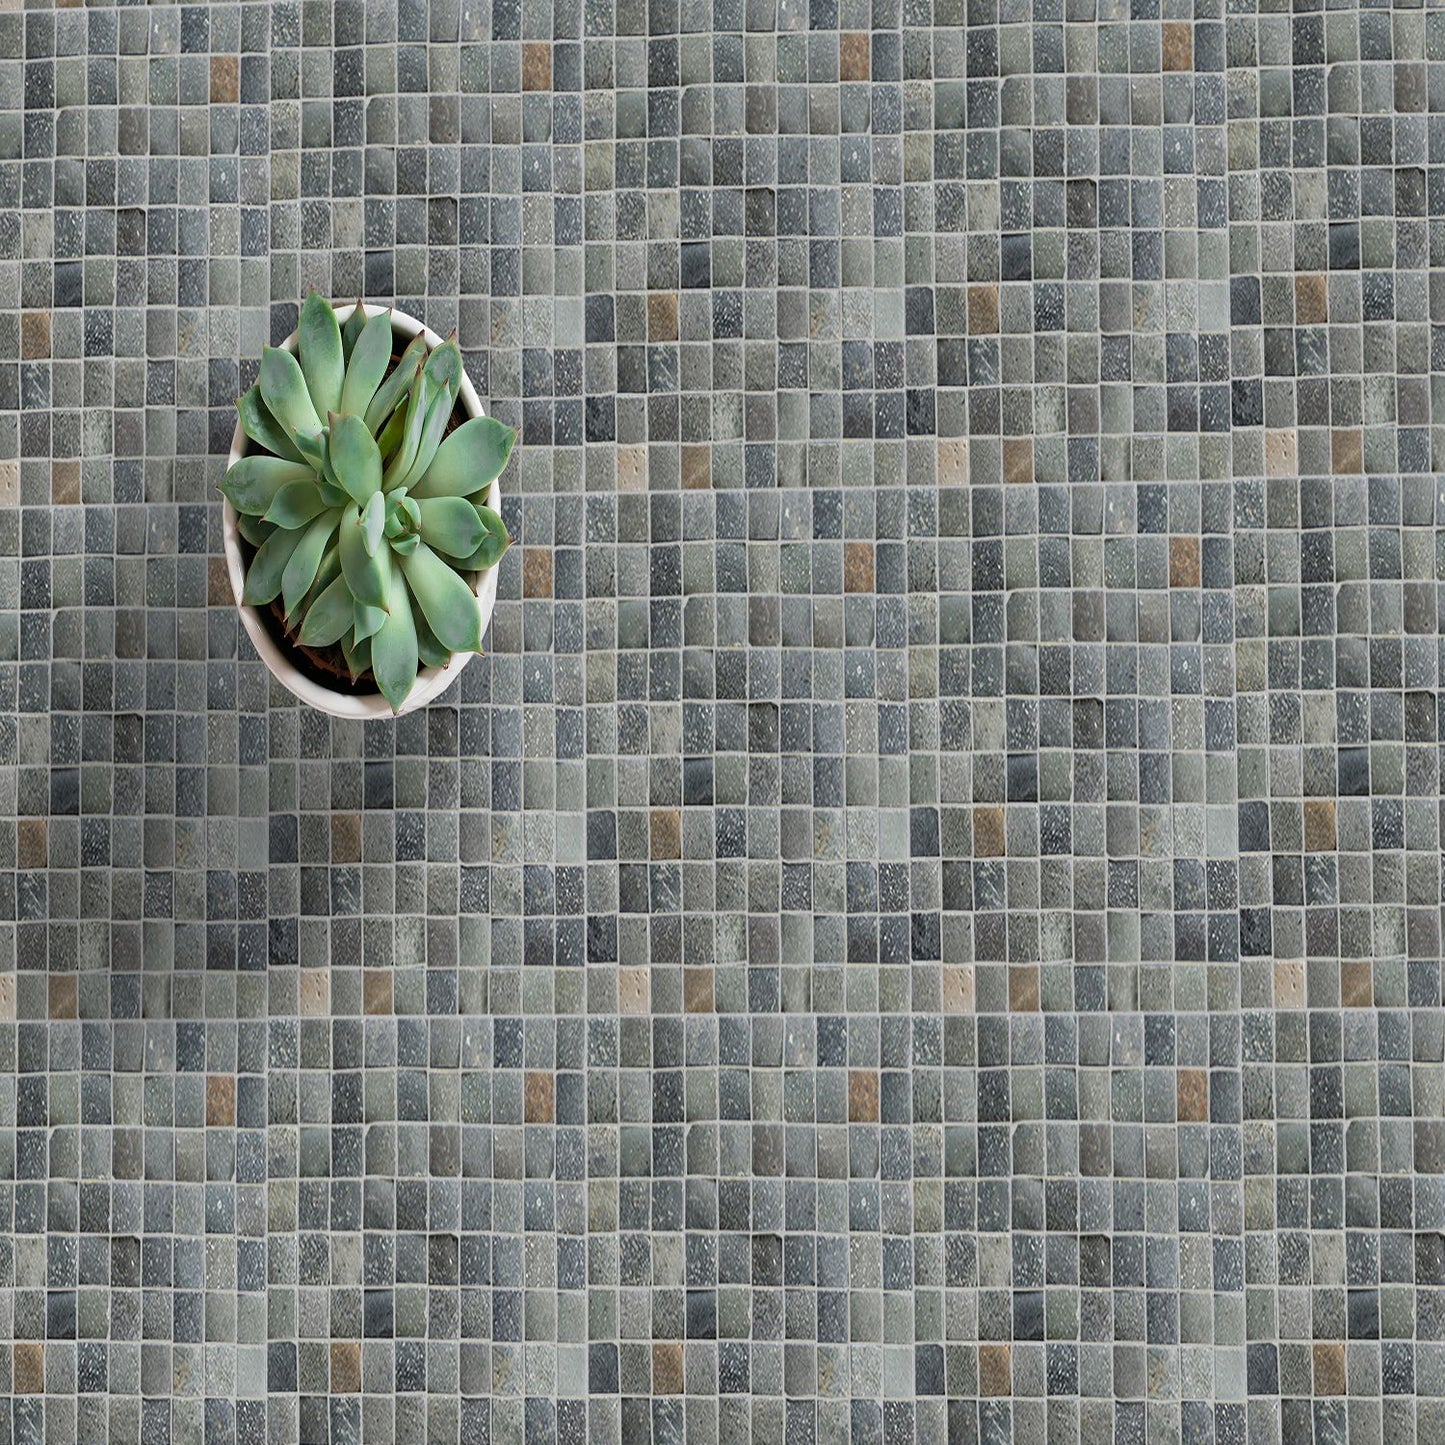 Molar 3 Mix Natural Stone Mosaic Wall & Floor Tile